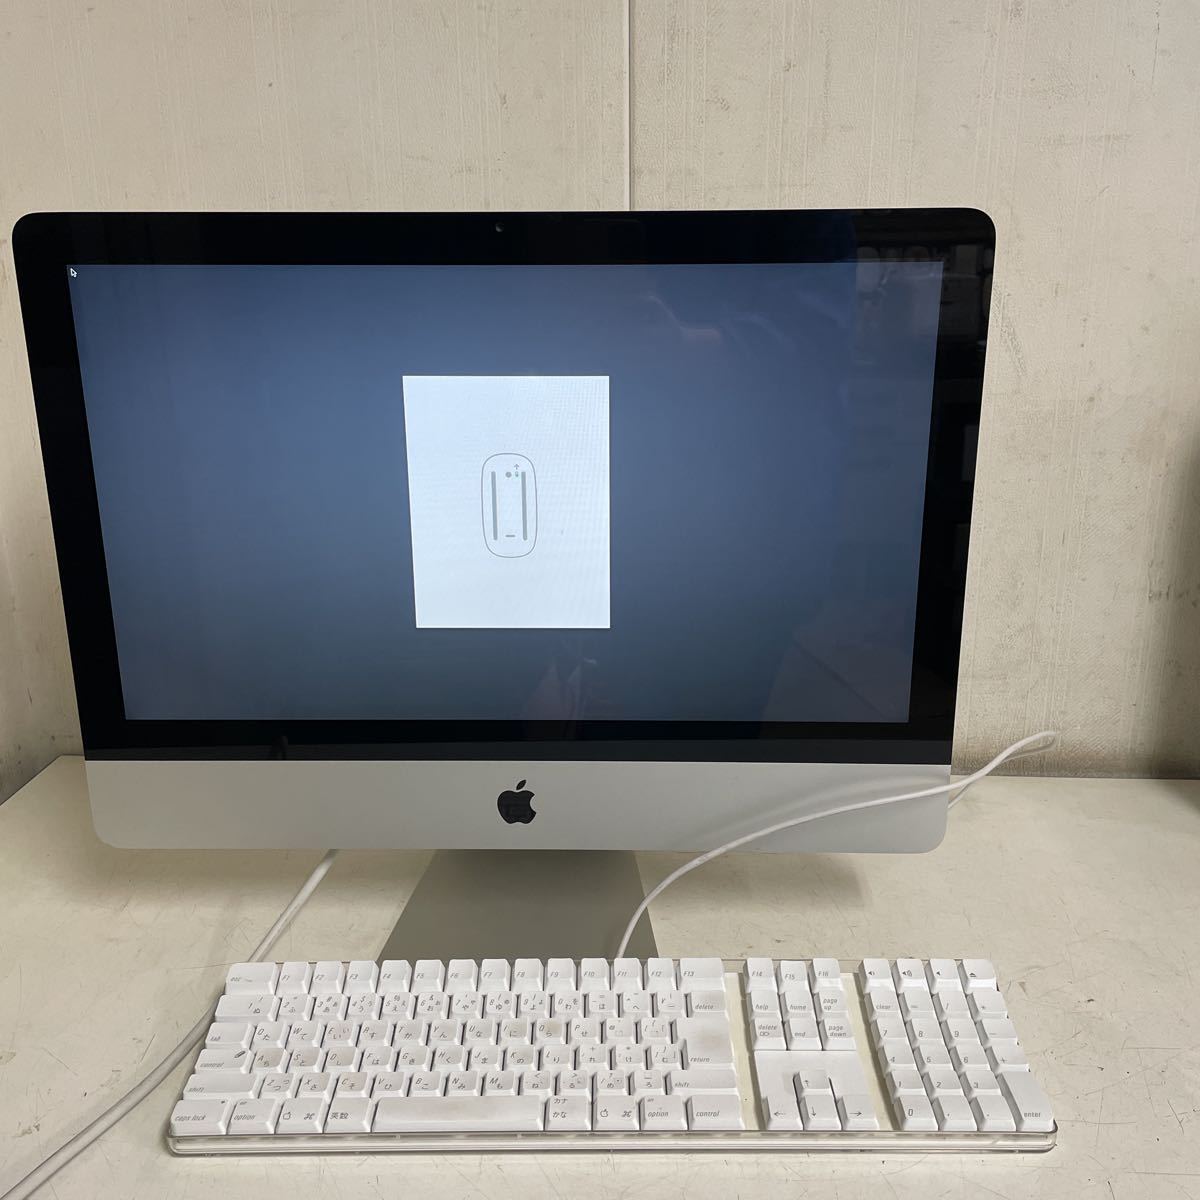 Apple A1311 ICES-003 4324A-BRCM1029 iMac パソコン 現状ジャンク扱い_画像1